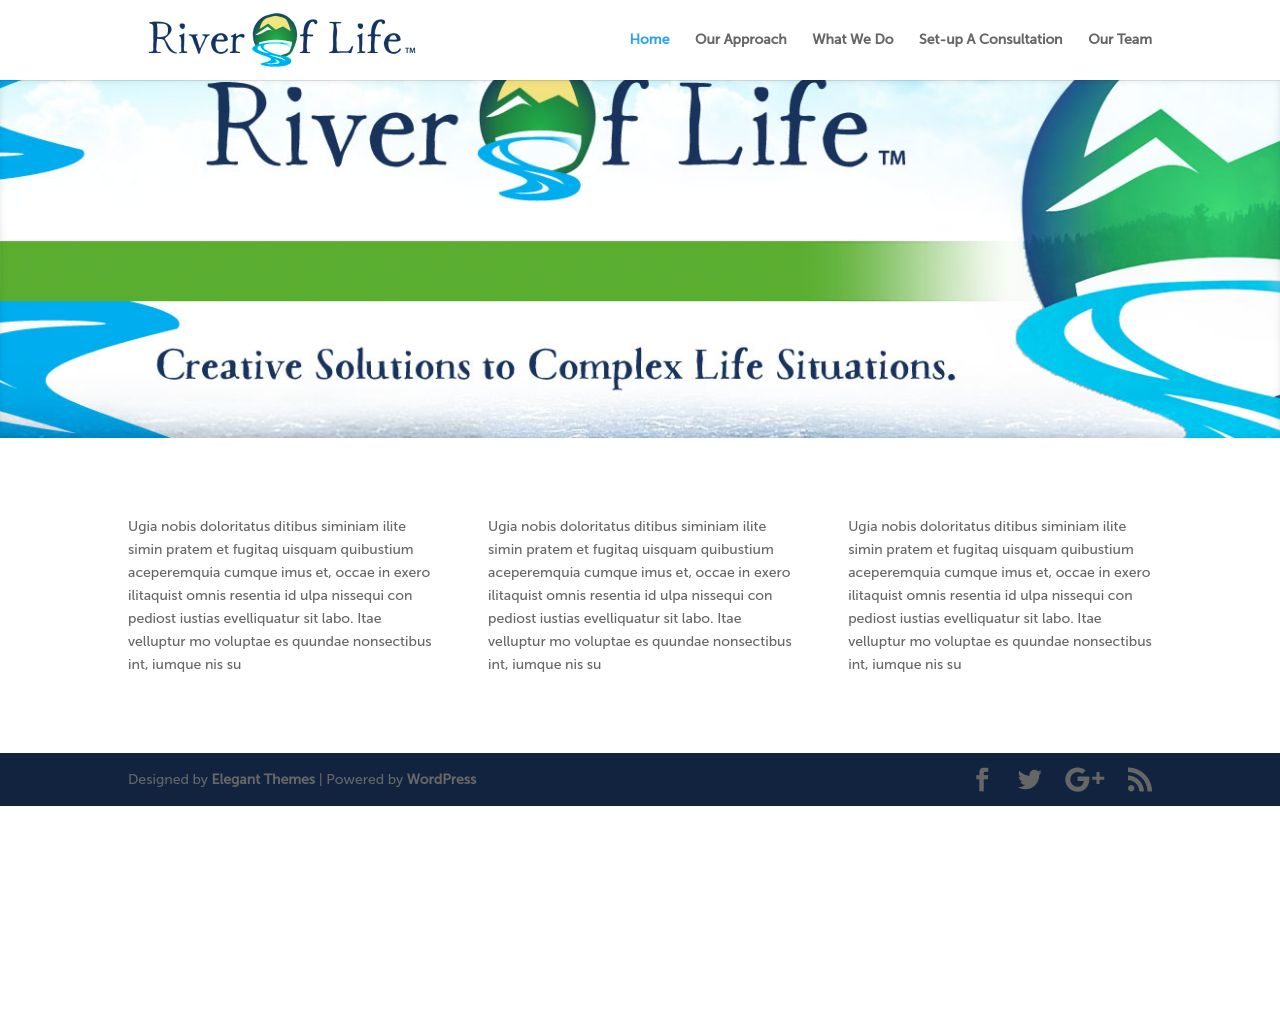 Image site riveroflifegeriatricfamilycareservices.net in 1280x1024